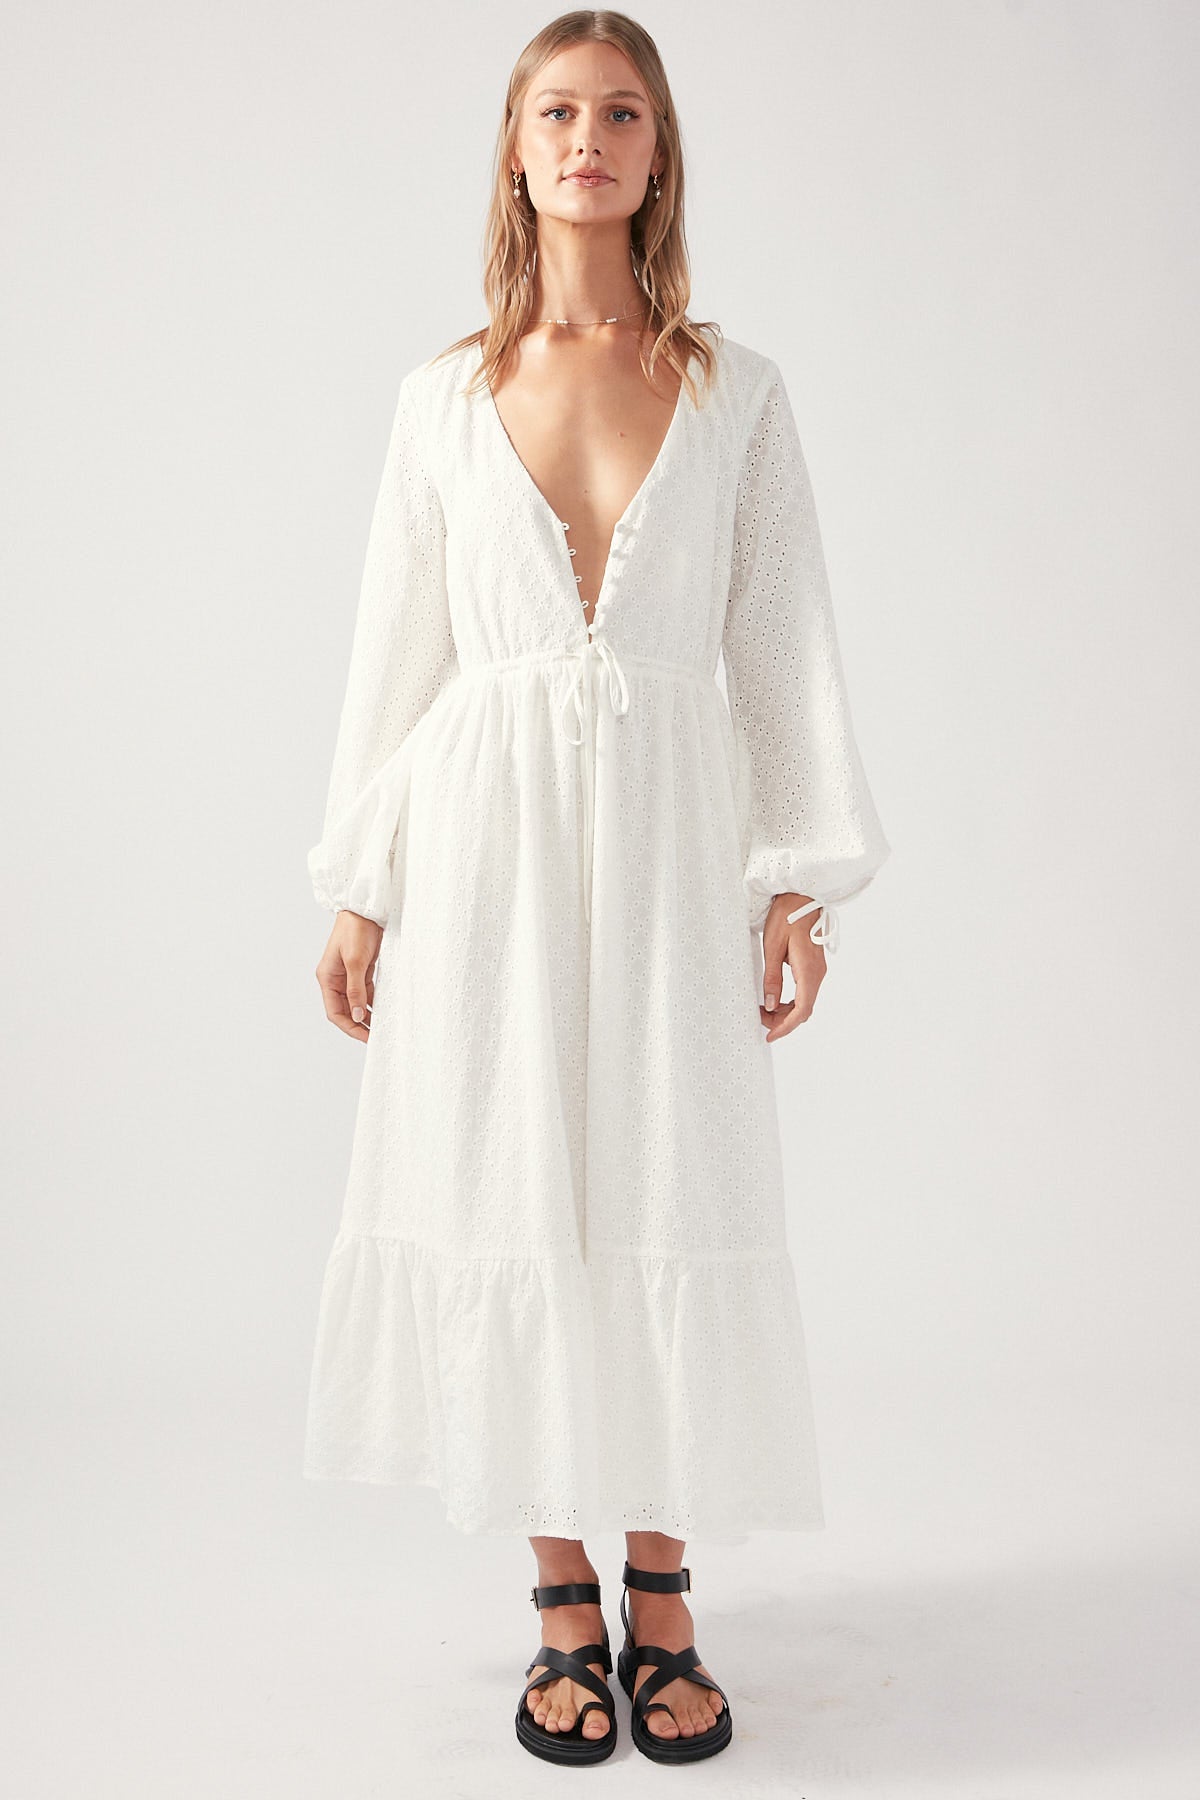 Perfect Stranger Louise Long Sleeve Broderie Dress White